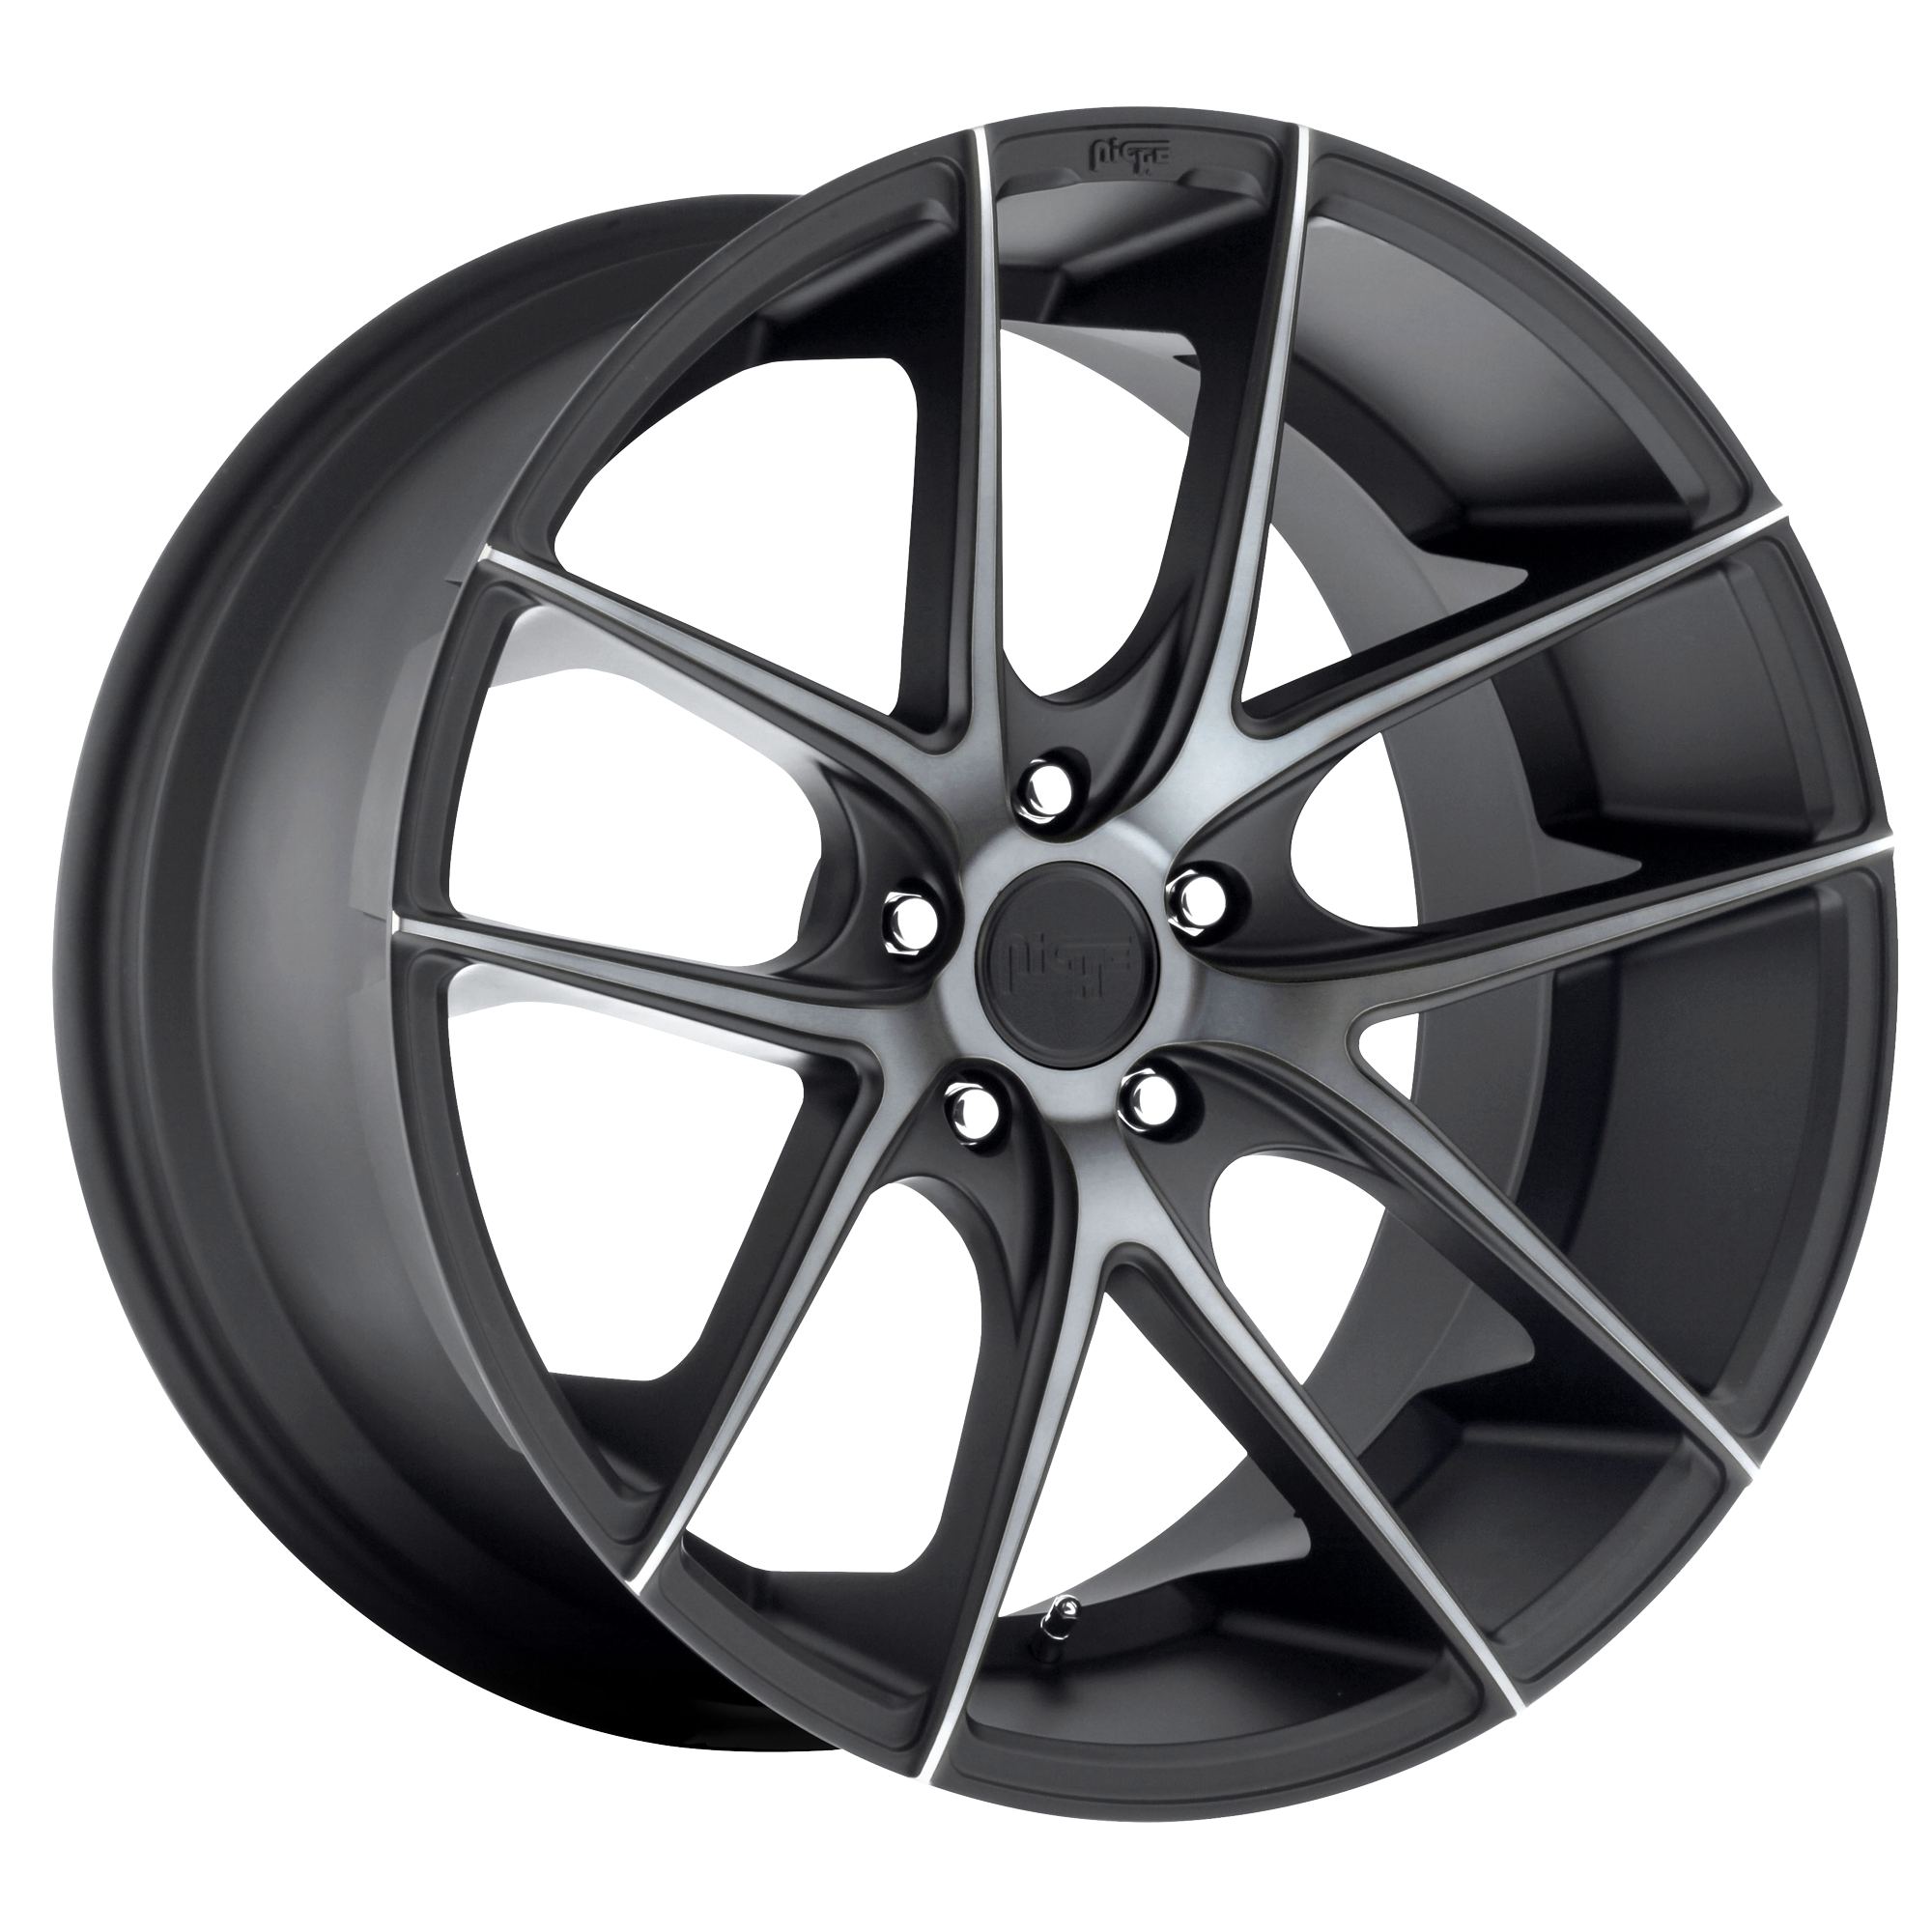 TARGA 18x8 5x110.00 MATTE BLACK DOUBLE DARK TINT (40 mm) - Tires and Engine Performance